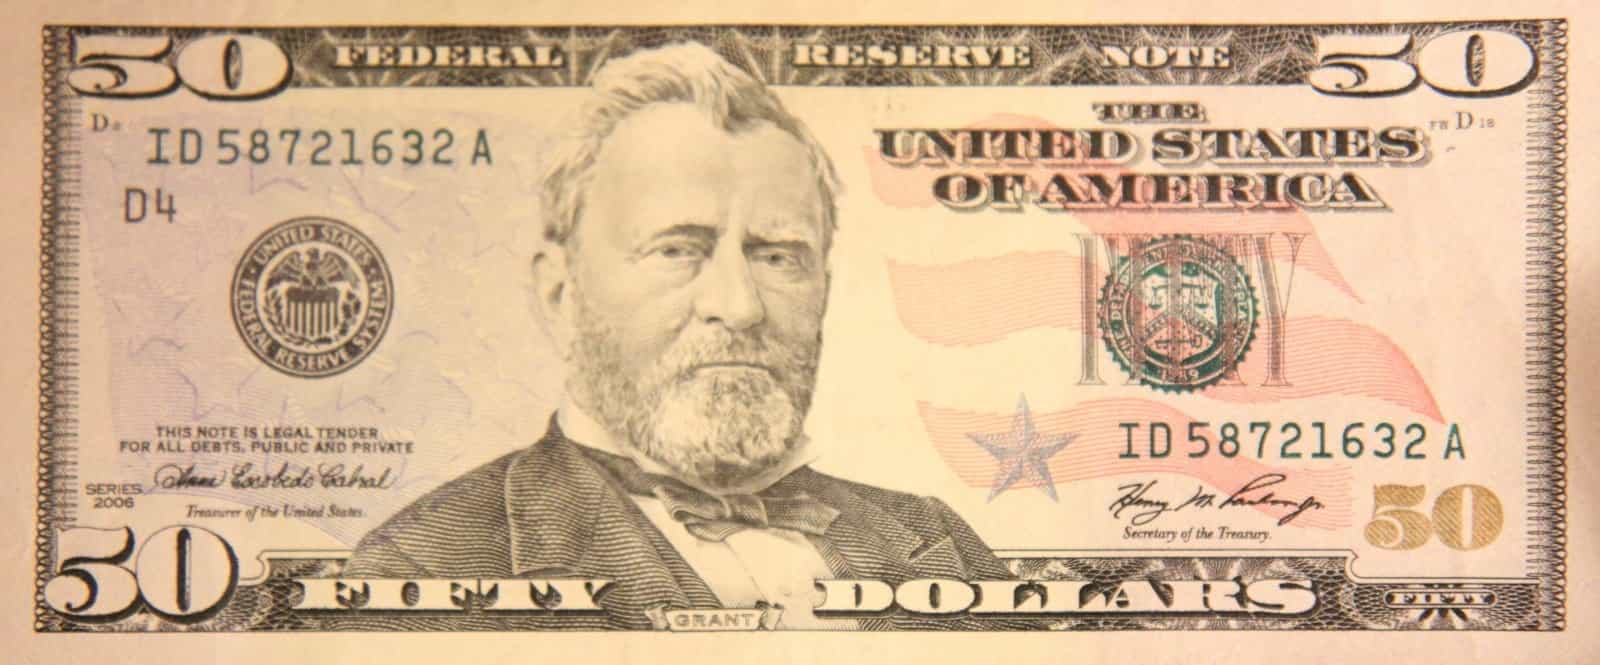 Blank 50 Dollar Bill Template And Dollar Bill Image Template